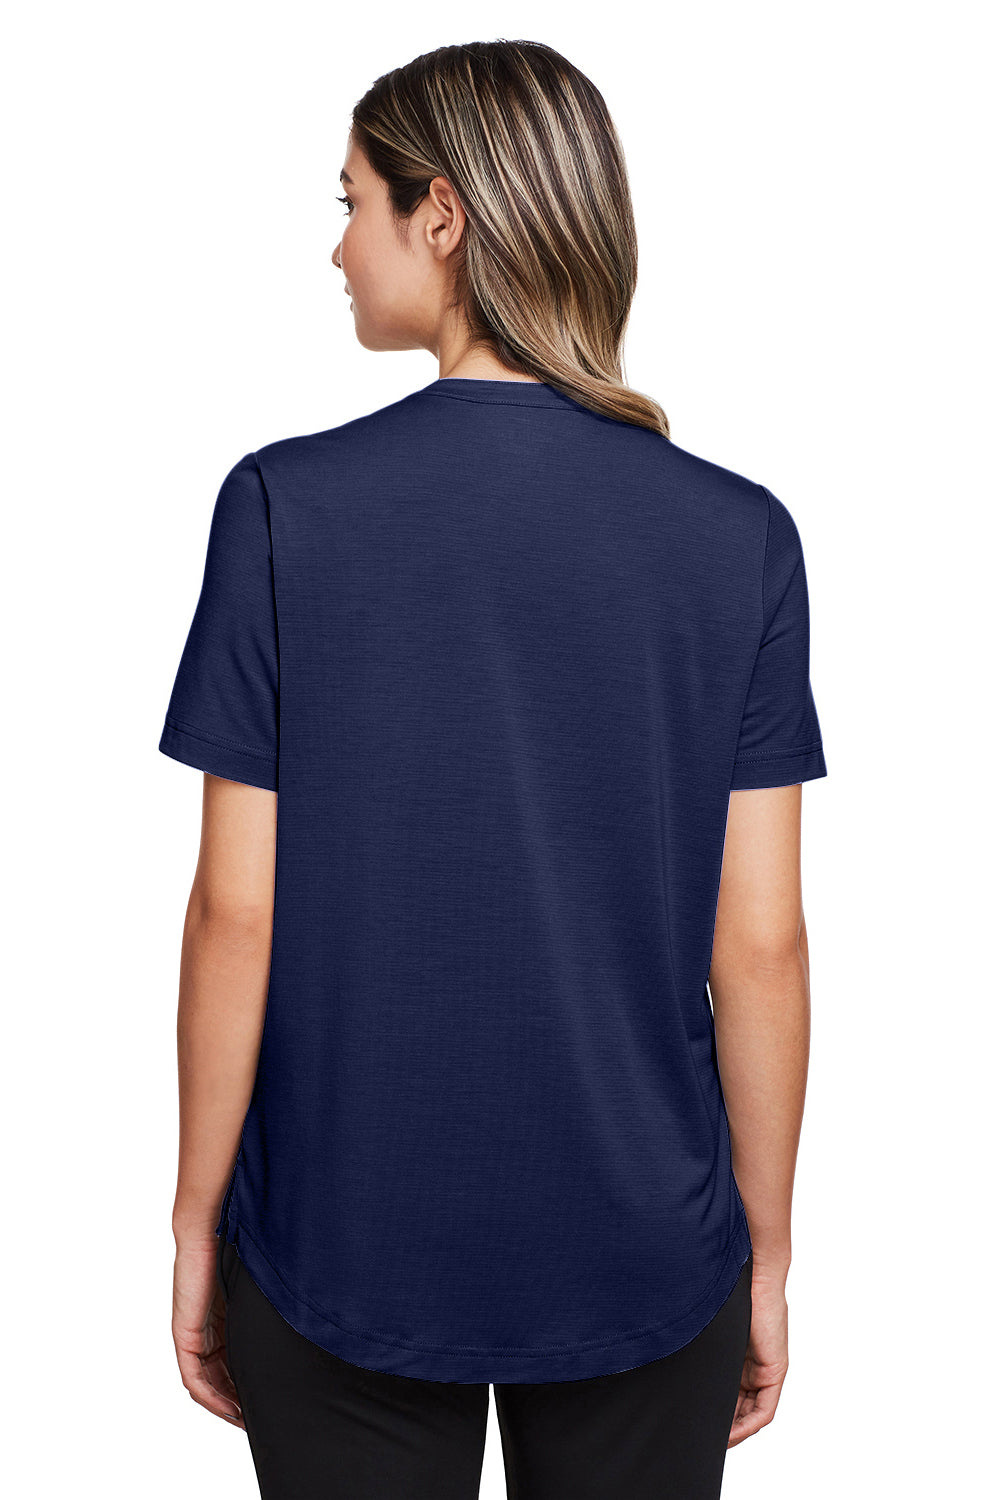 North End NE100W Womens Jaq Performance Moisture Wicking Short Sleeve Polo Shirt Navy Blue Back